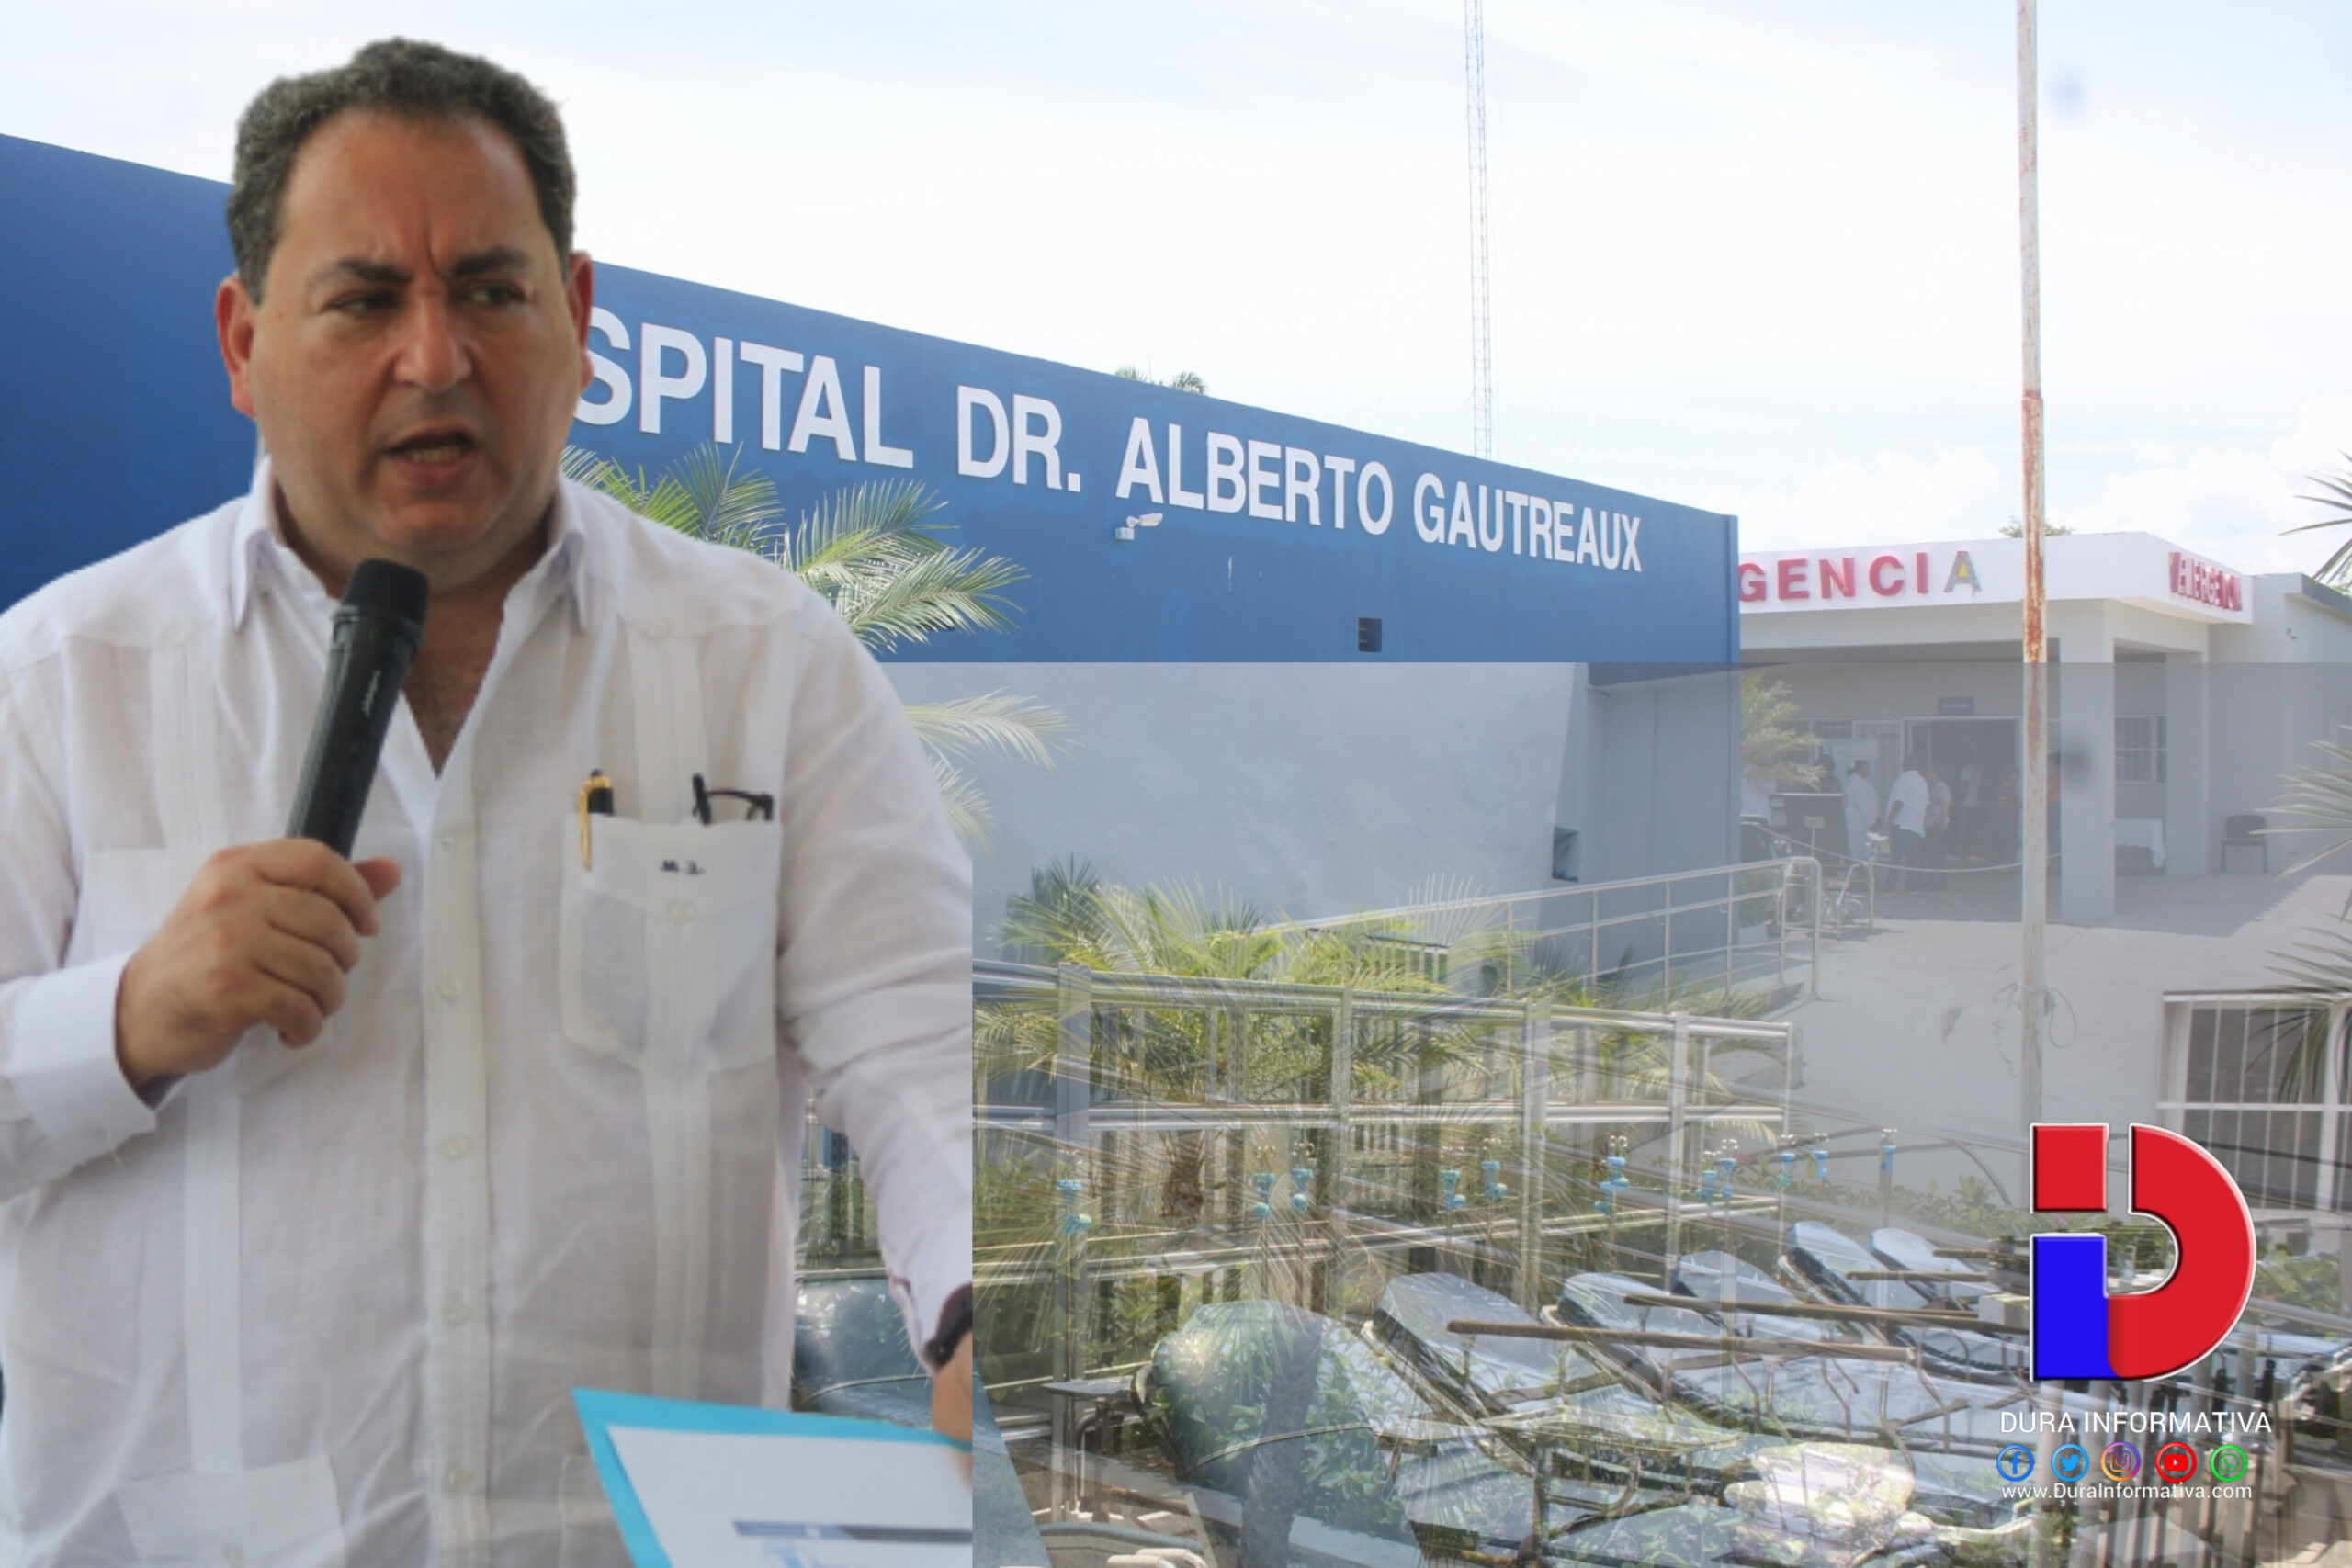 Mahi Xxx Fuck - Gobierno Dominicano a travÃ©s del Servicio Nacional de Salud entrega al  hospital SÃ¡nchez mÃ¡s de 3 millones de pesos en equipos mÃ©dicos.